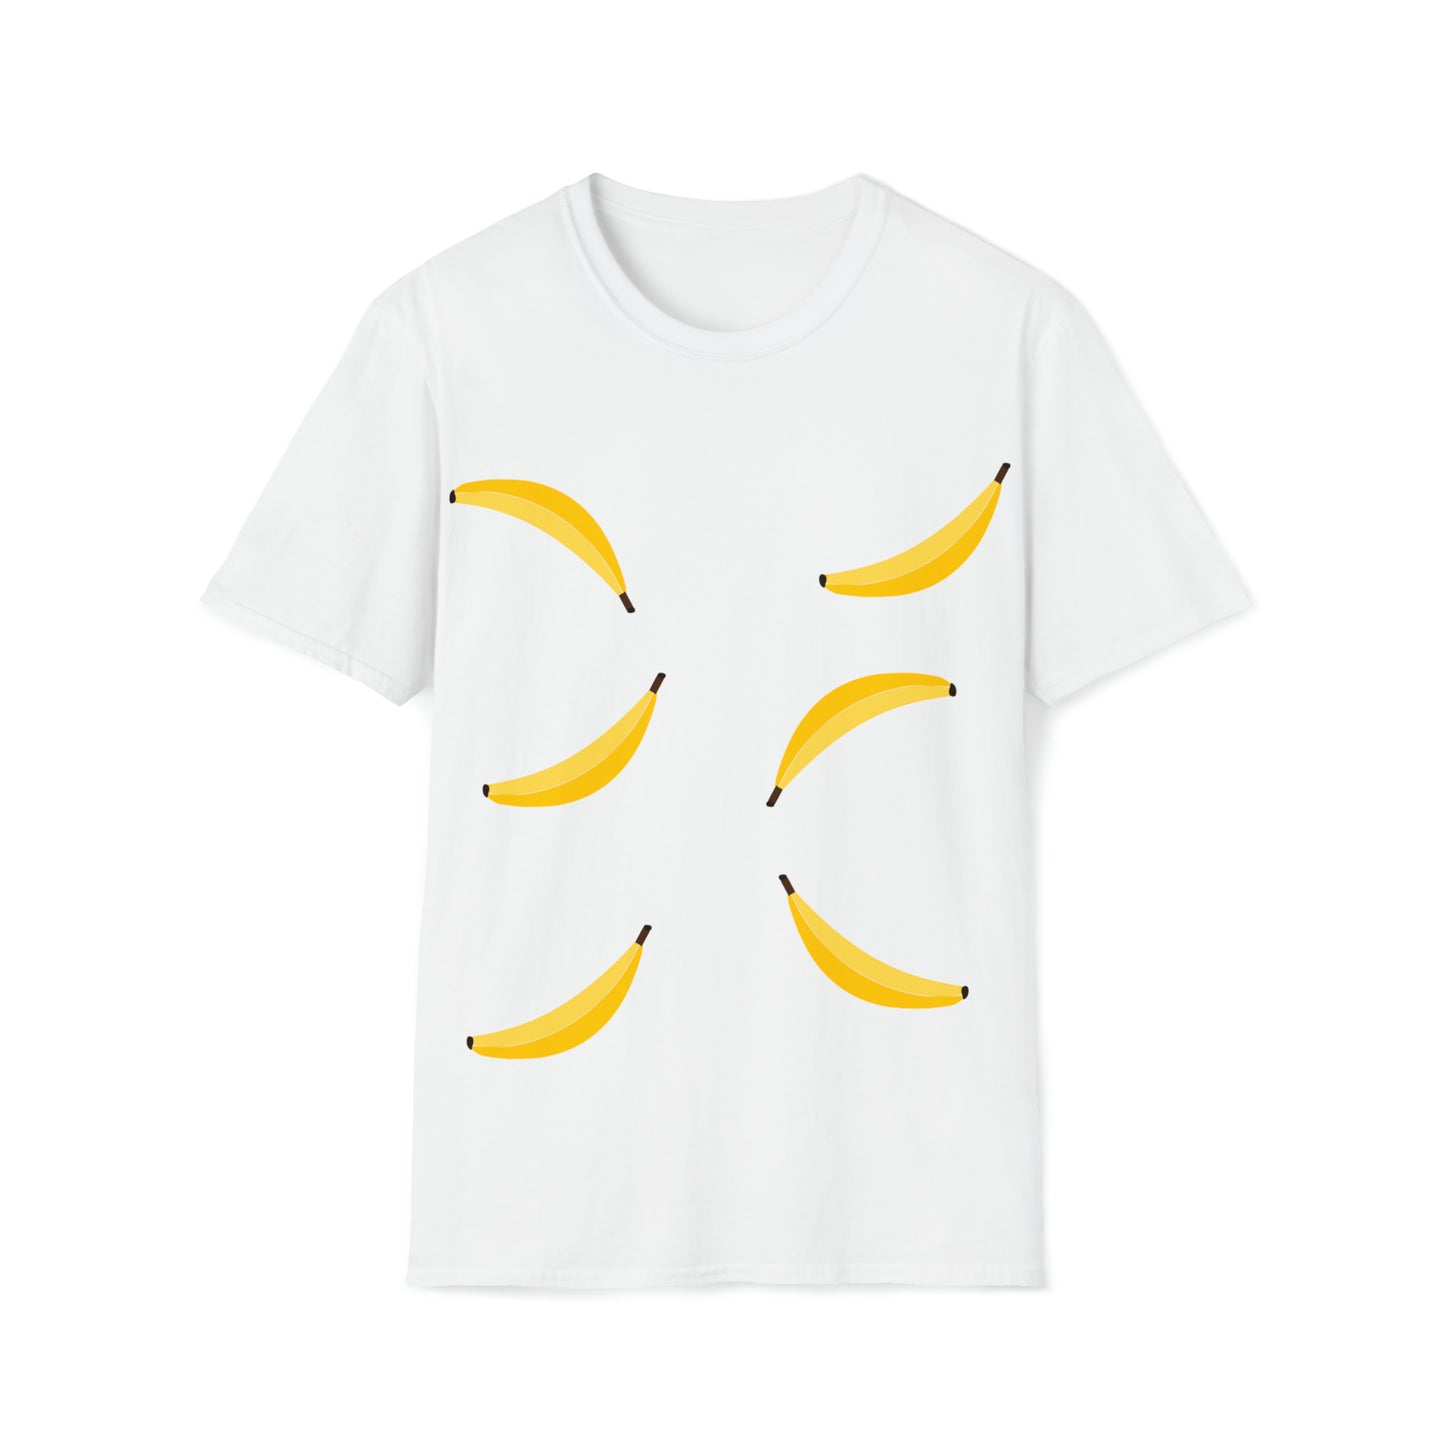 Going Bananas T-shirt